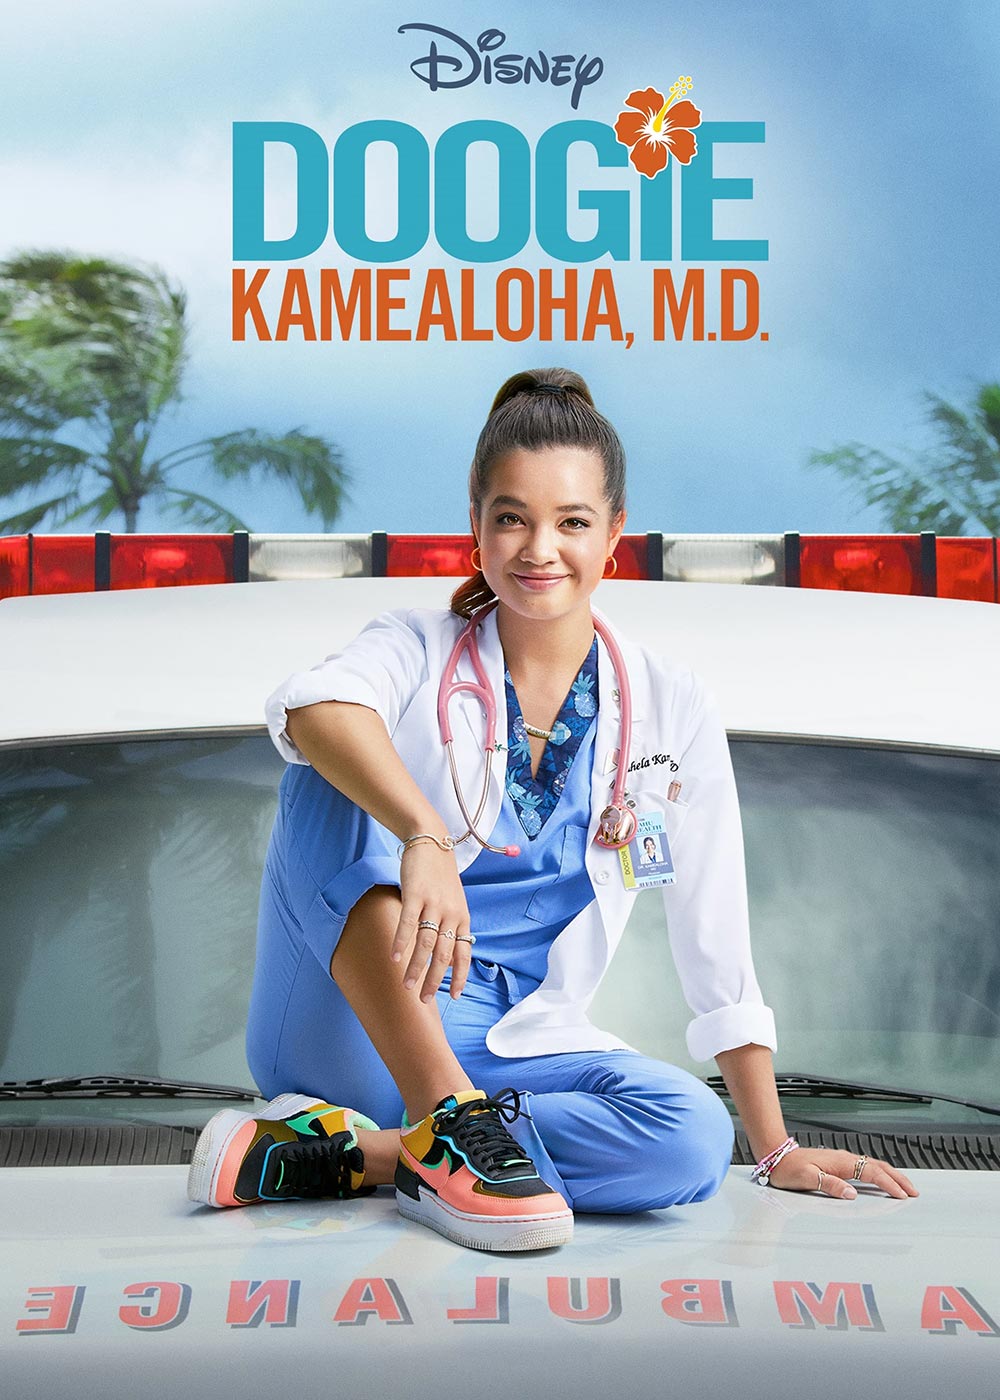 Doogie Kamealoha Md Season 1 Tv Series 2021 Release Date Review Cast Trailer Watch 0484